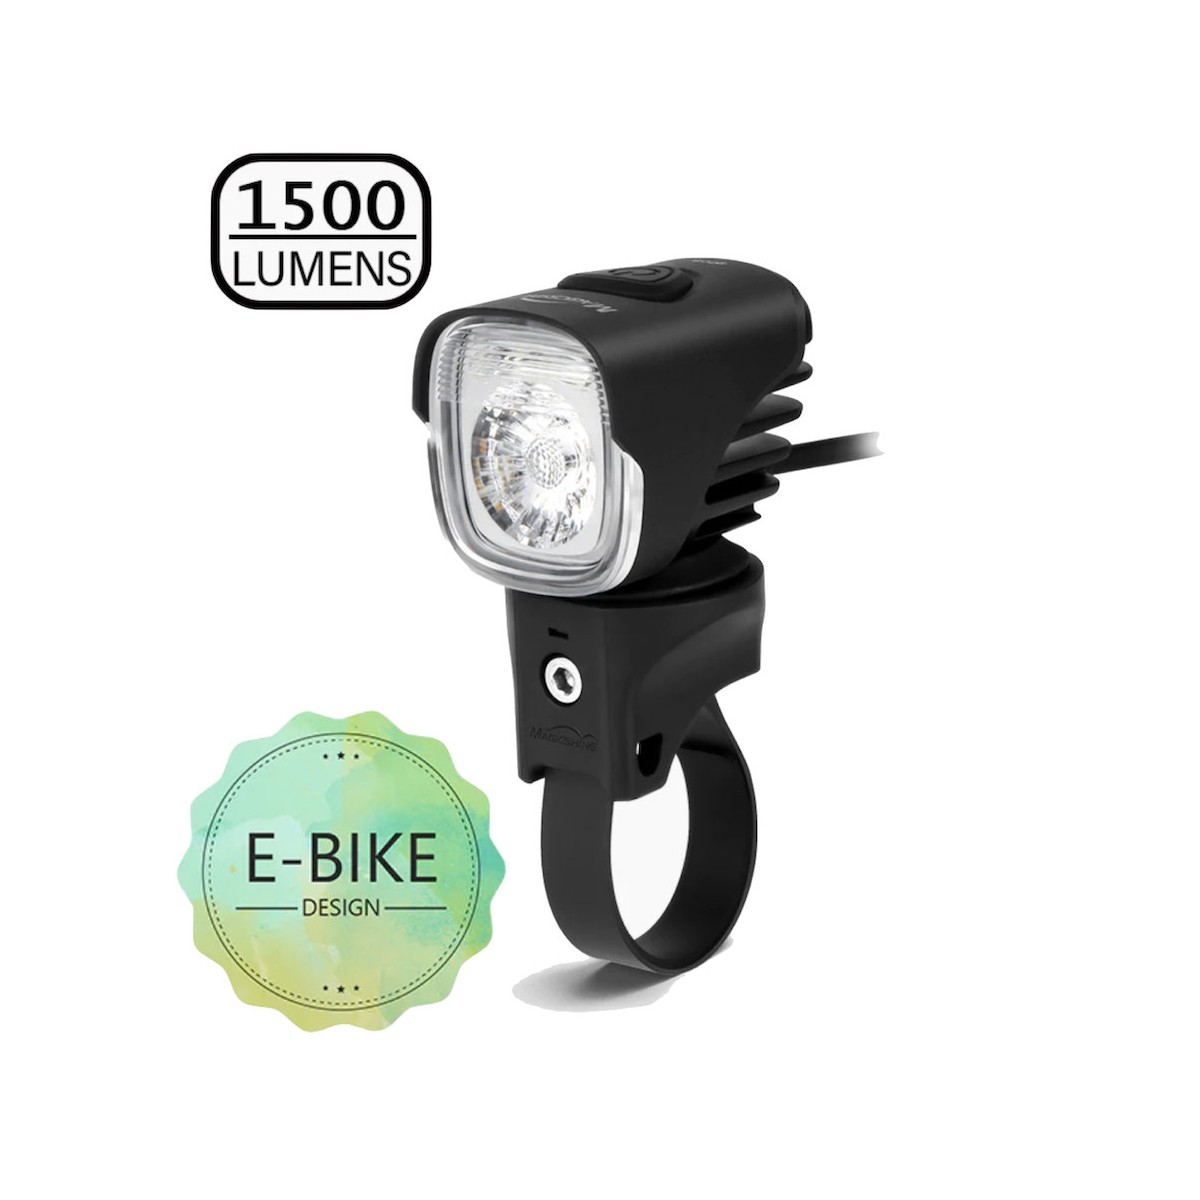 MAGICSHINE front light MJ 900S (for e-bike)